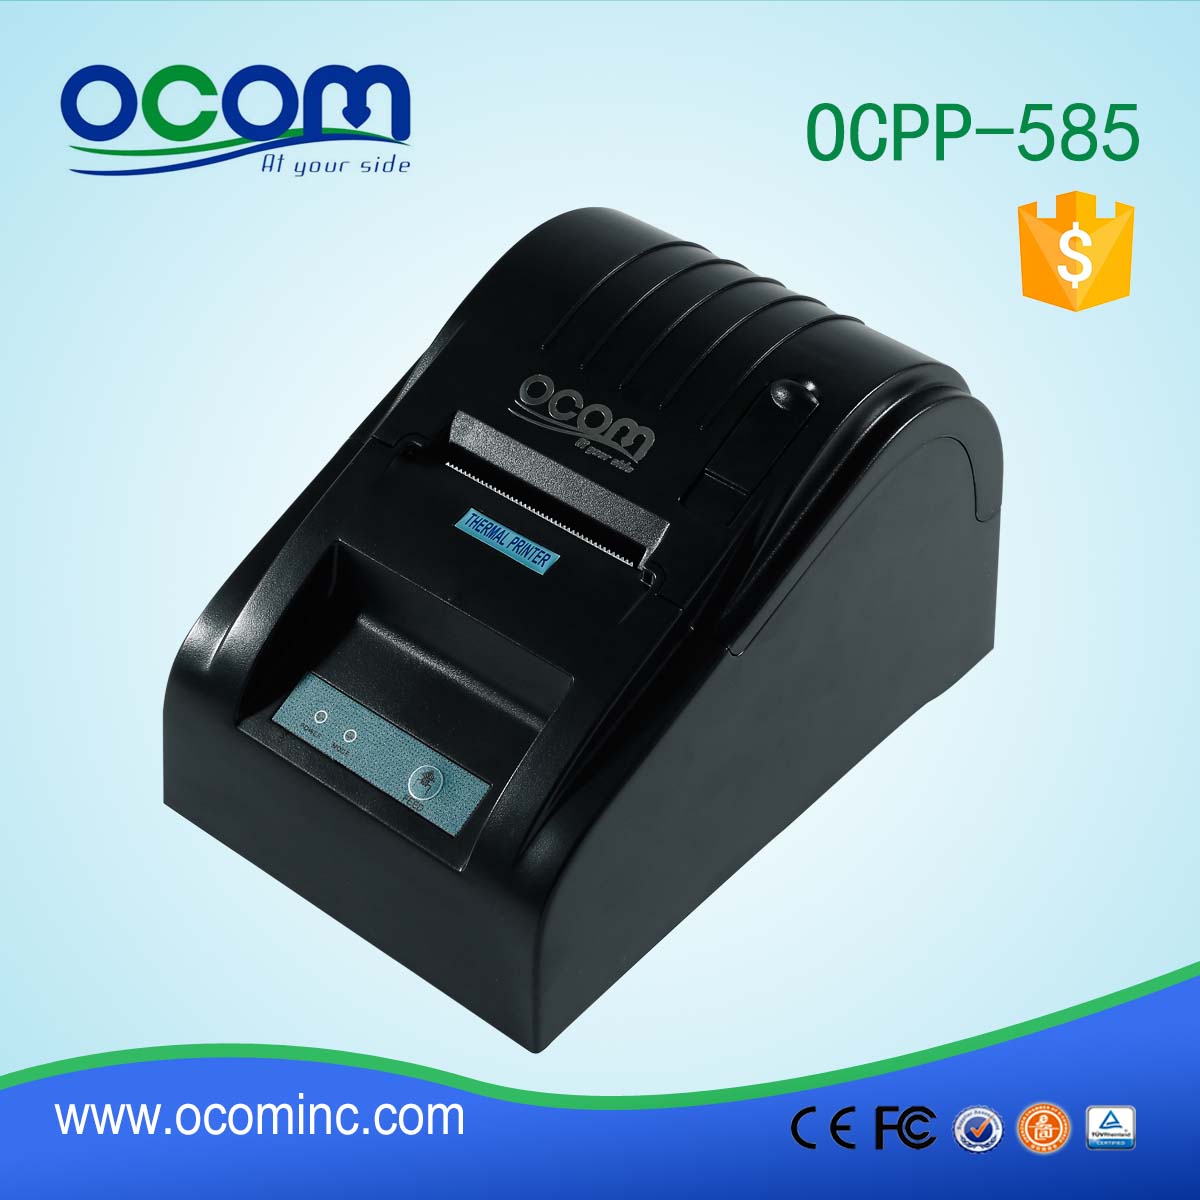 OCPP-585 58 χιλιοστών θερμική παραλαβή σούπερ μάρκετ εκτυπωτή